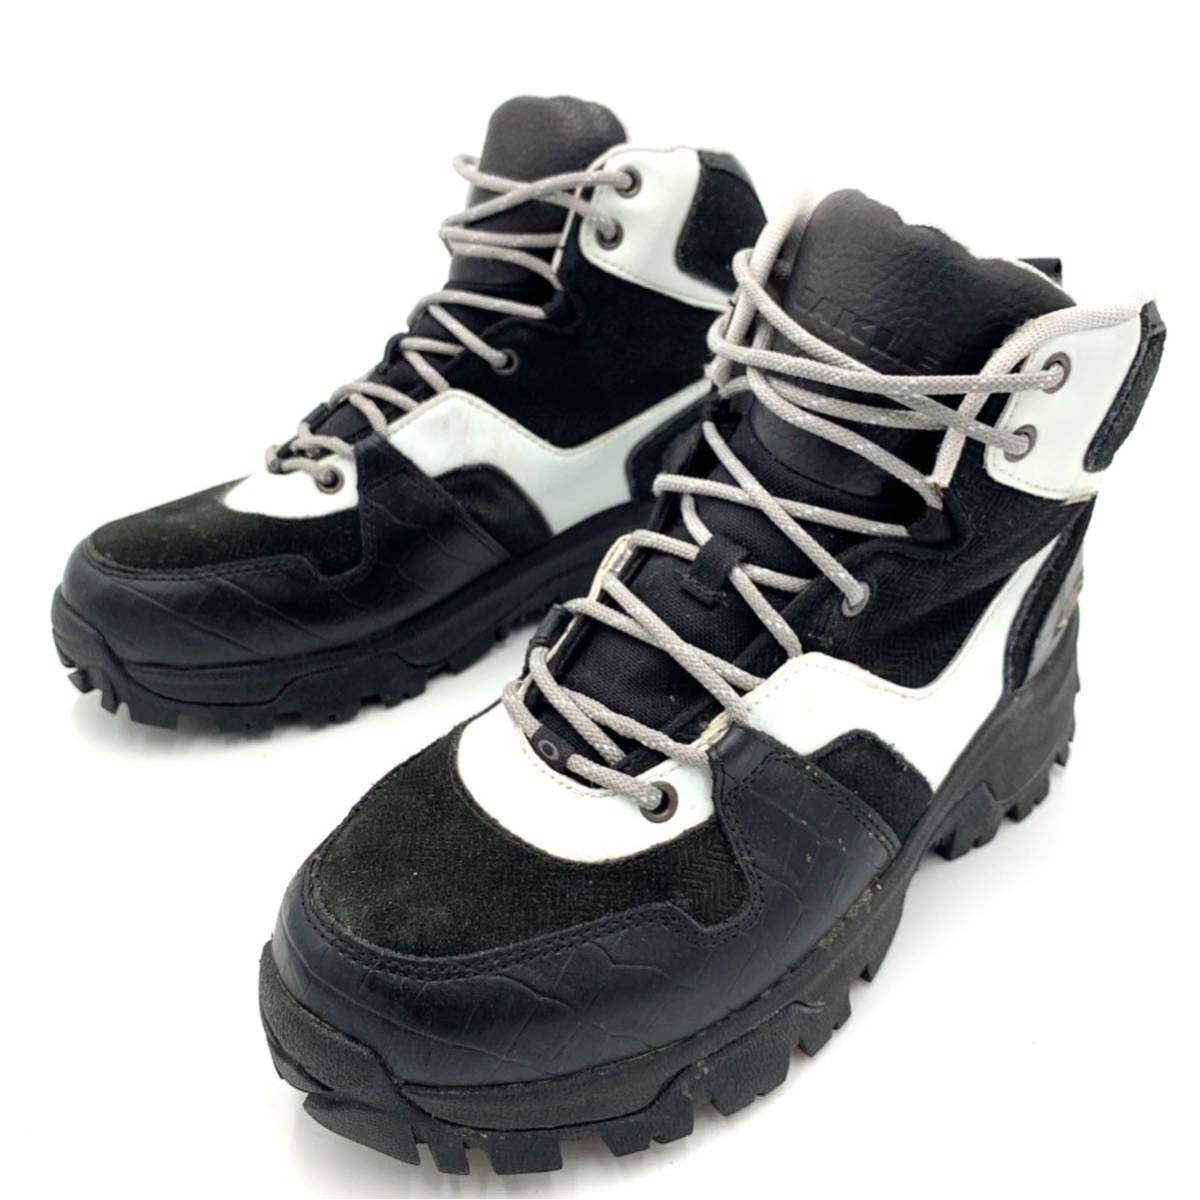 D ＊ '機能性・履き心地抜群' OAKLEY オークリー WATERPROOF マウンテン / トレッキングシューズ 27cm THERMOLITE メンズ 登山靴 ブラック